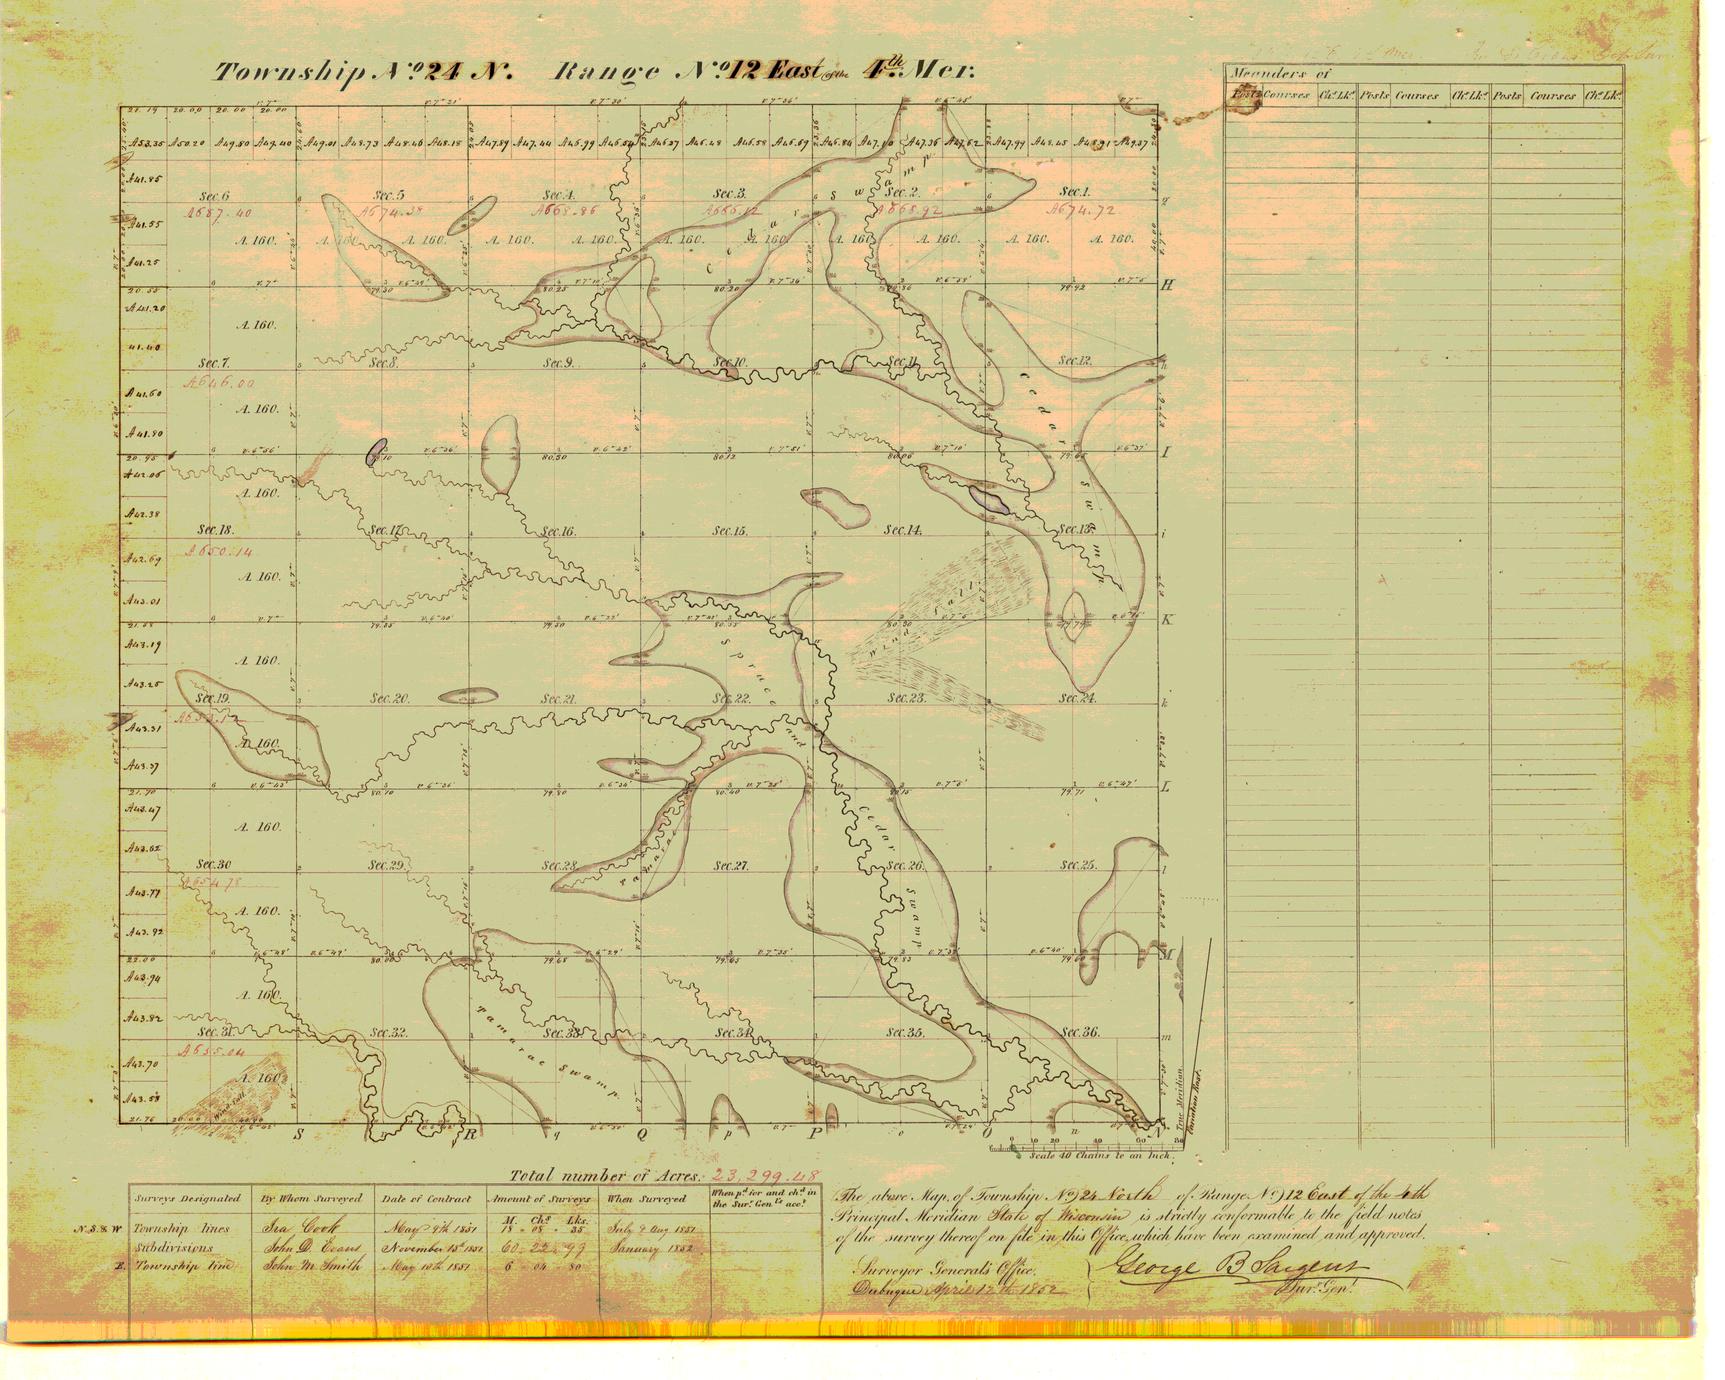 [Public Land Survey System map: Wisconsin Township 24 North, Range 12 East]